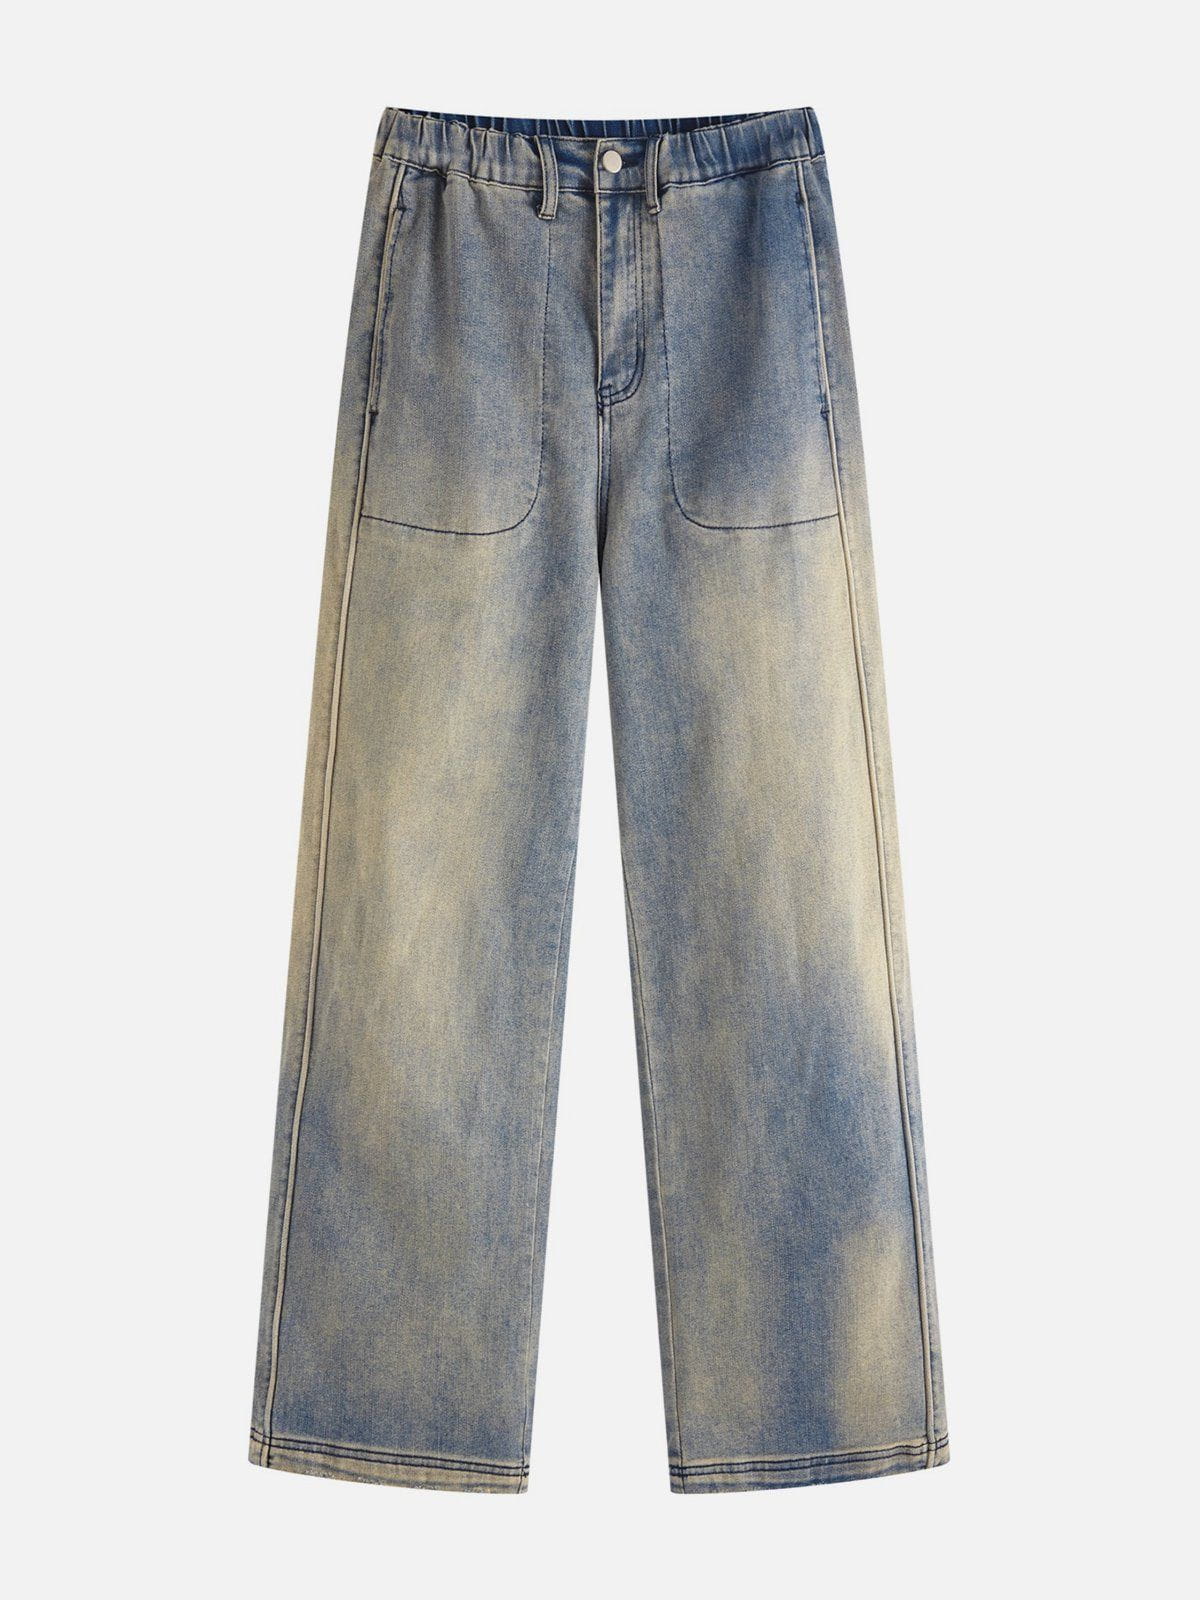 Aelfric Eden Vintage Washed Jeans – Aelfric eden